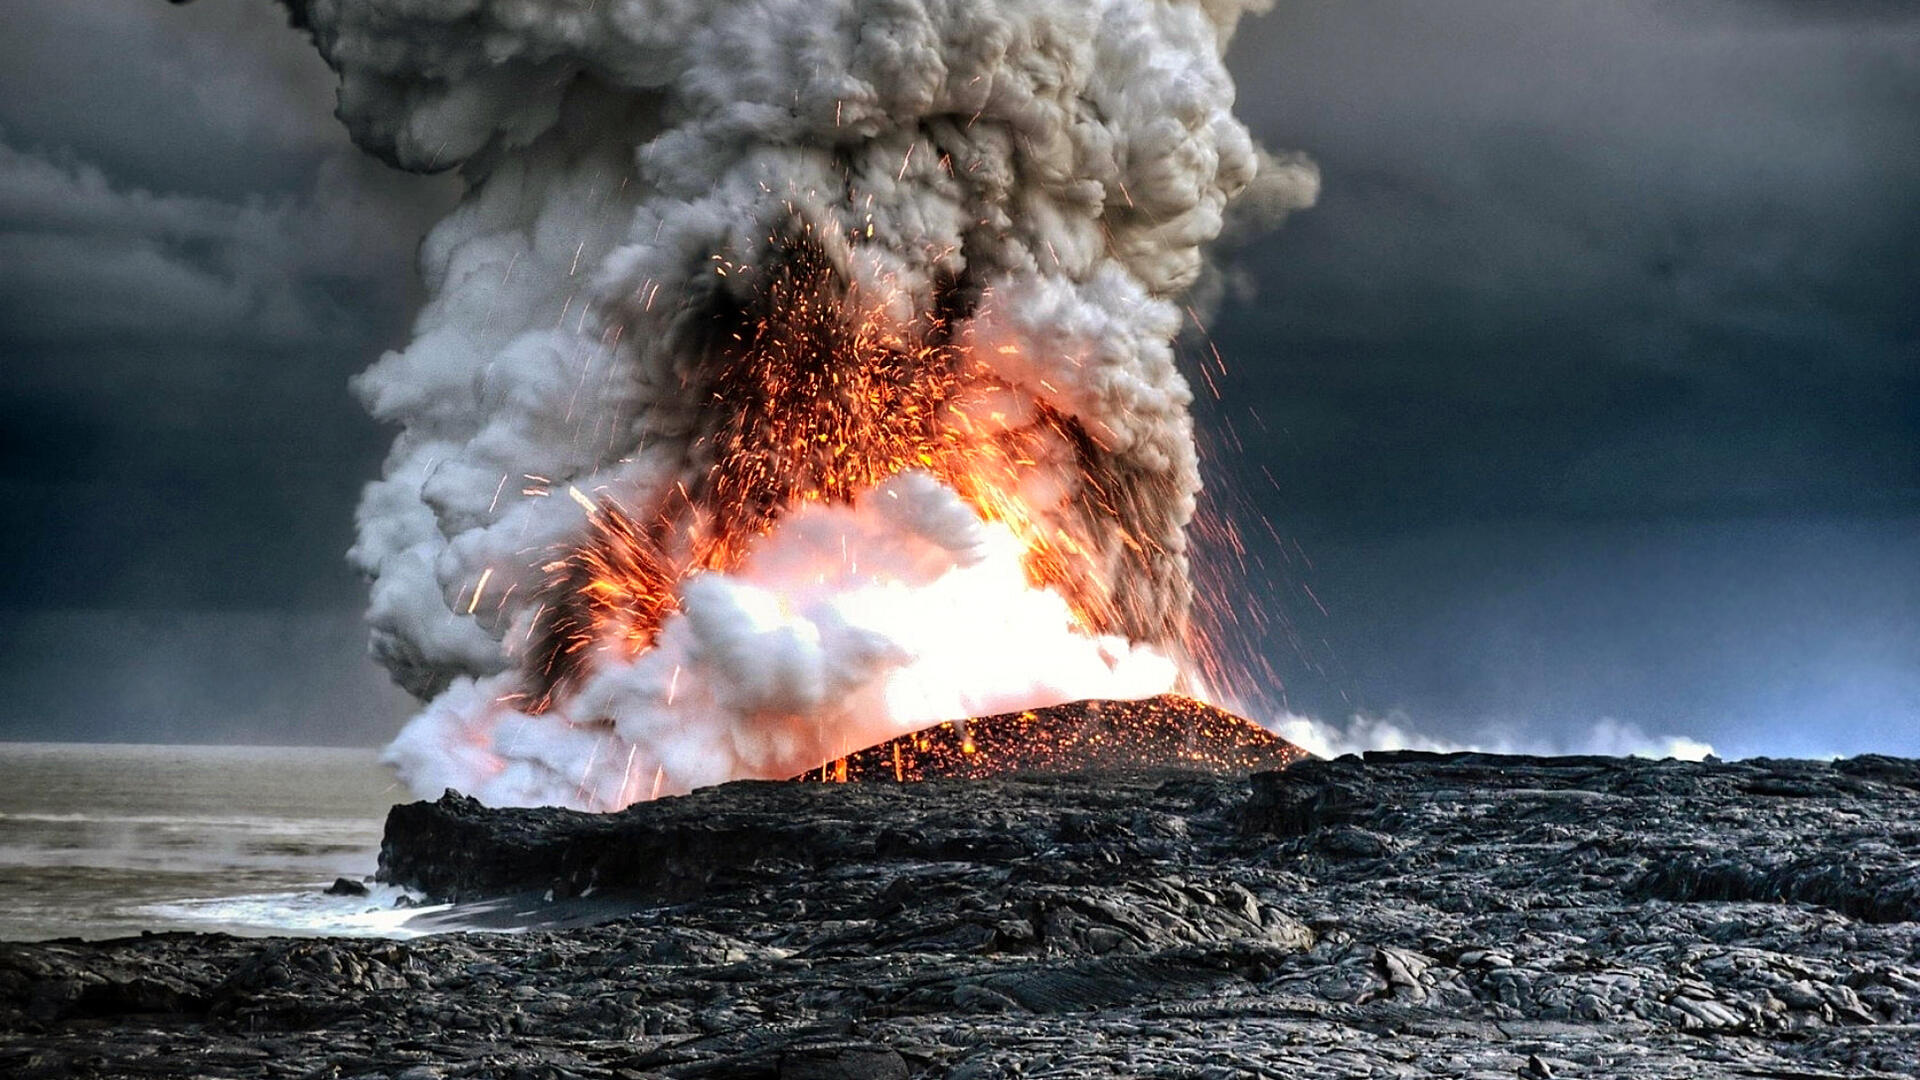 Dramatic lava eruption, Mesmerizing volcanic glow, Fiery display, Nature's stunning showcase, 1920x1080 Full HD Desktop